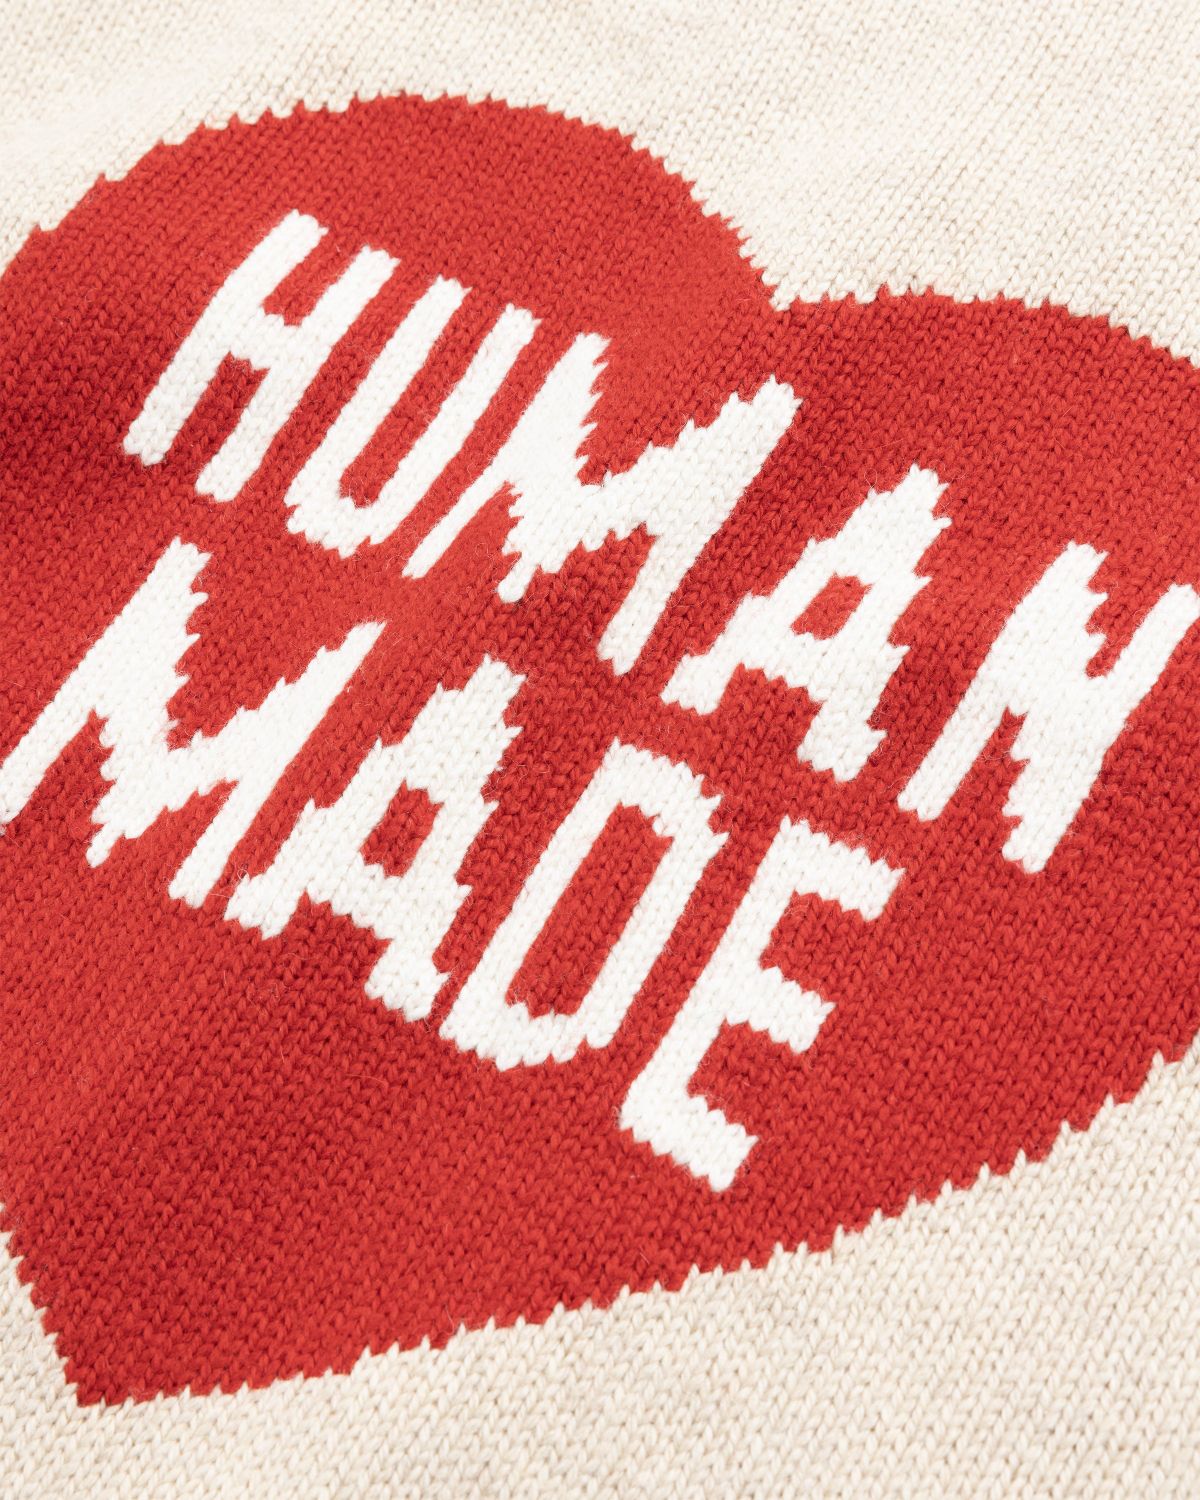 Human Made – Heart Knit Sweater Beige | Highsnobiety Shop